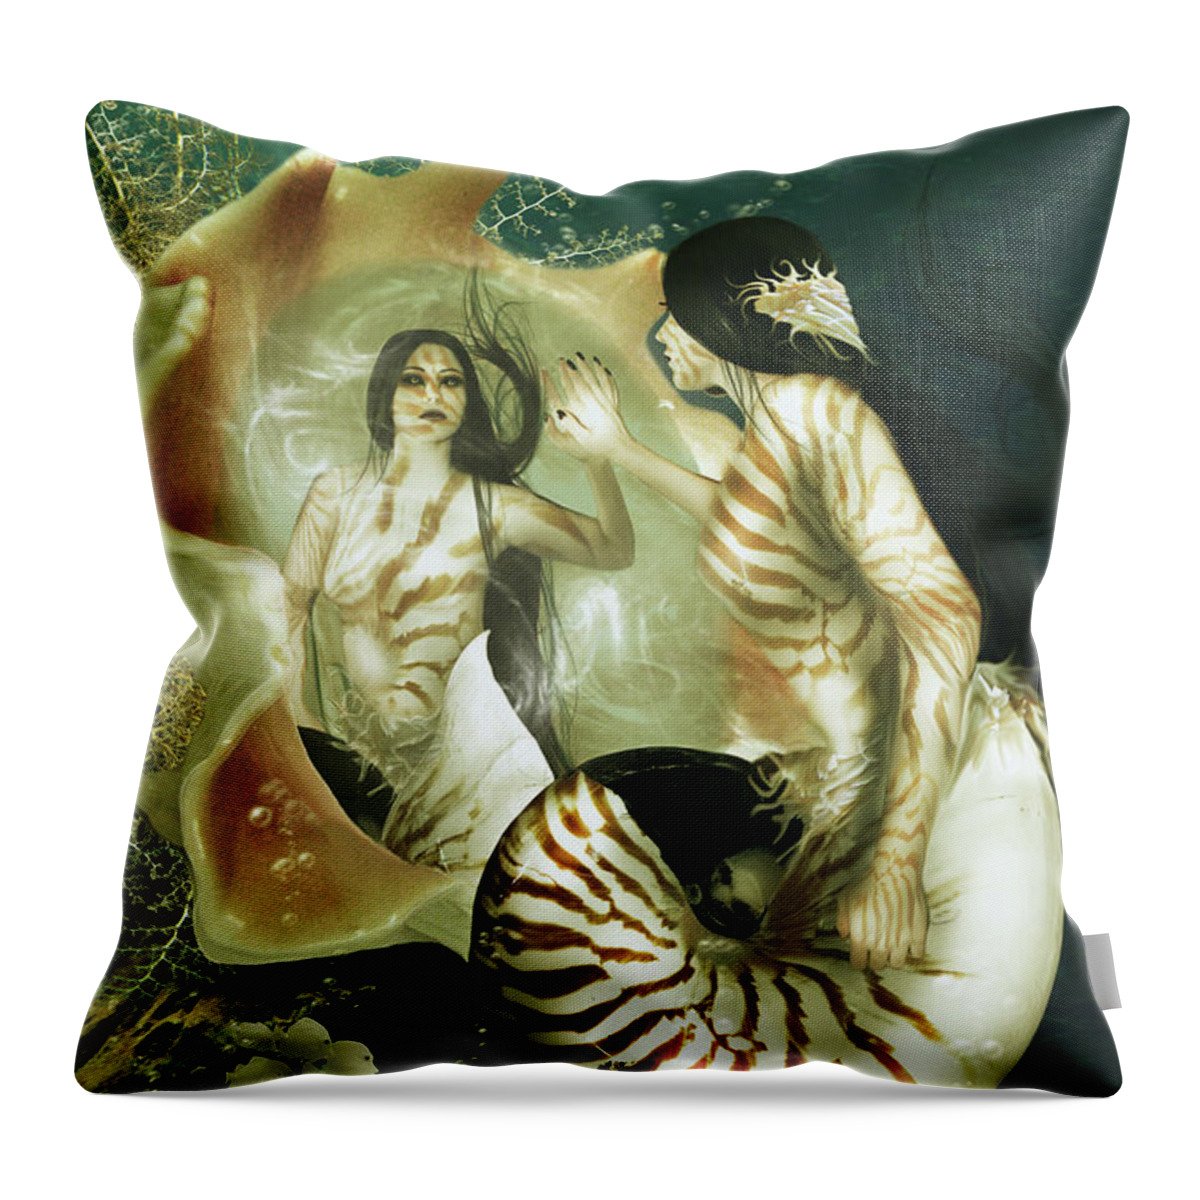 Fantasy Throw Pillow featuring the digital art Nautilus by Babette Van den Berg